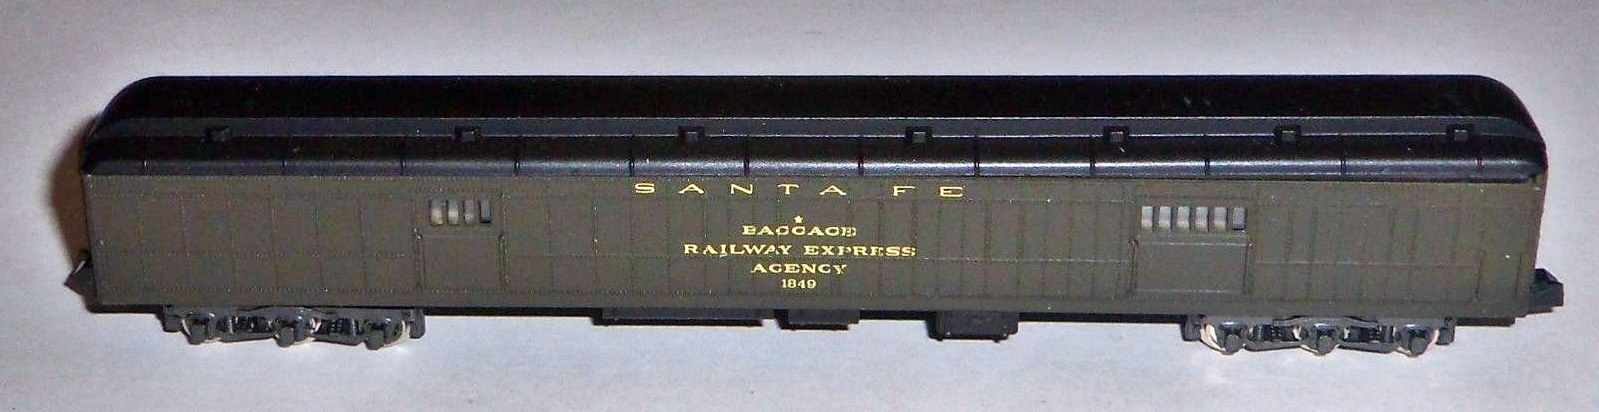 N Scale - Rivarossi - 9559 - Passenger Car, Heavyweight, Baggage - Santa Fe - 1849